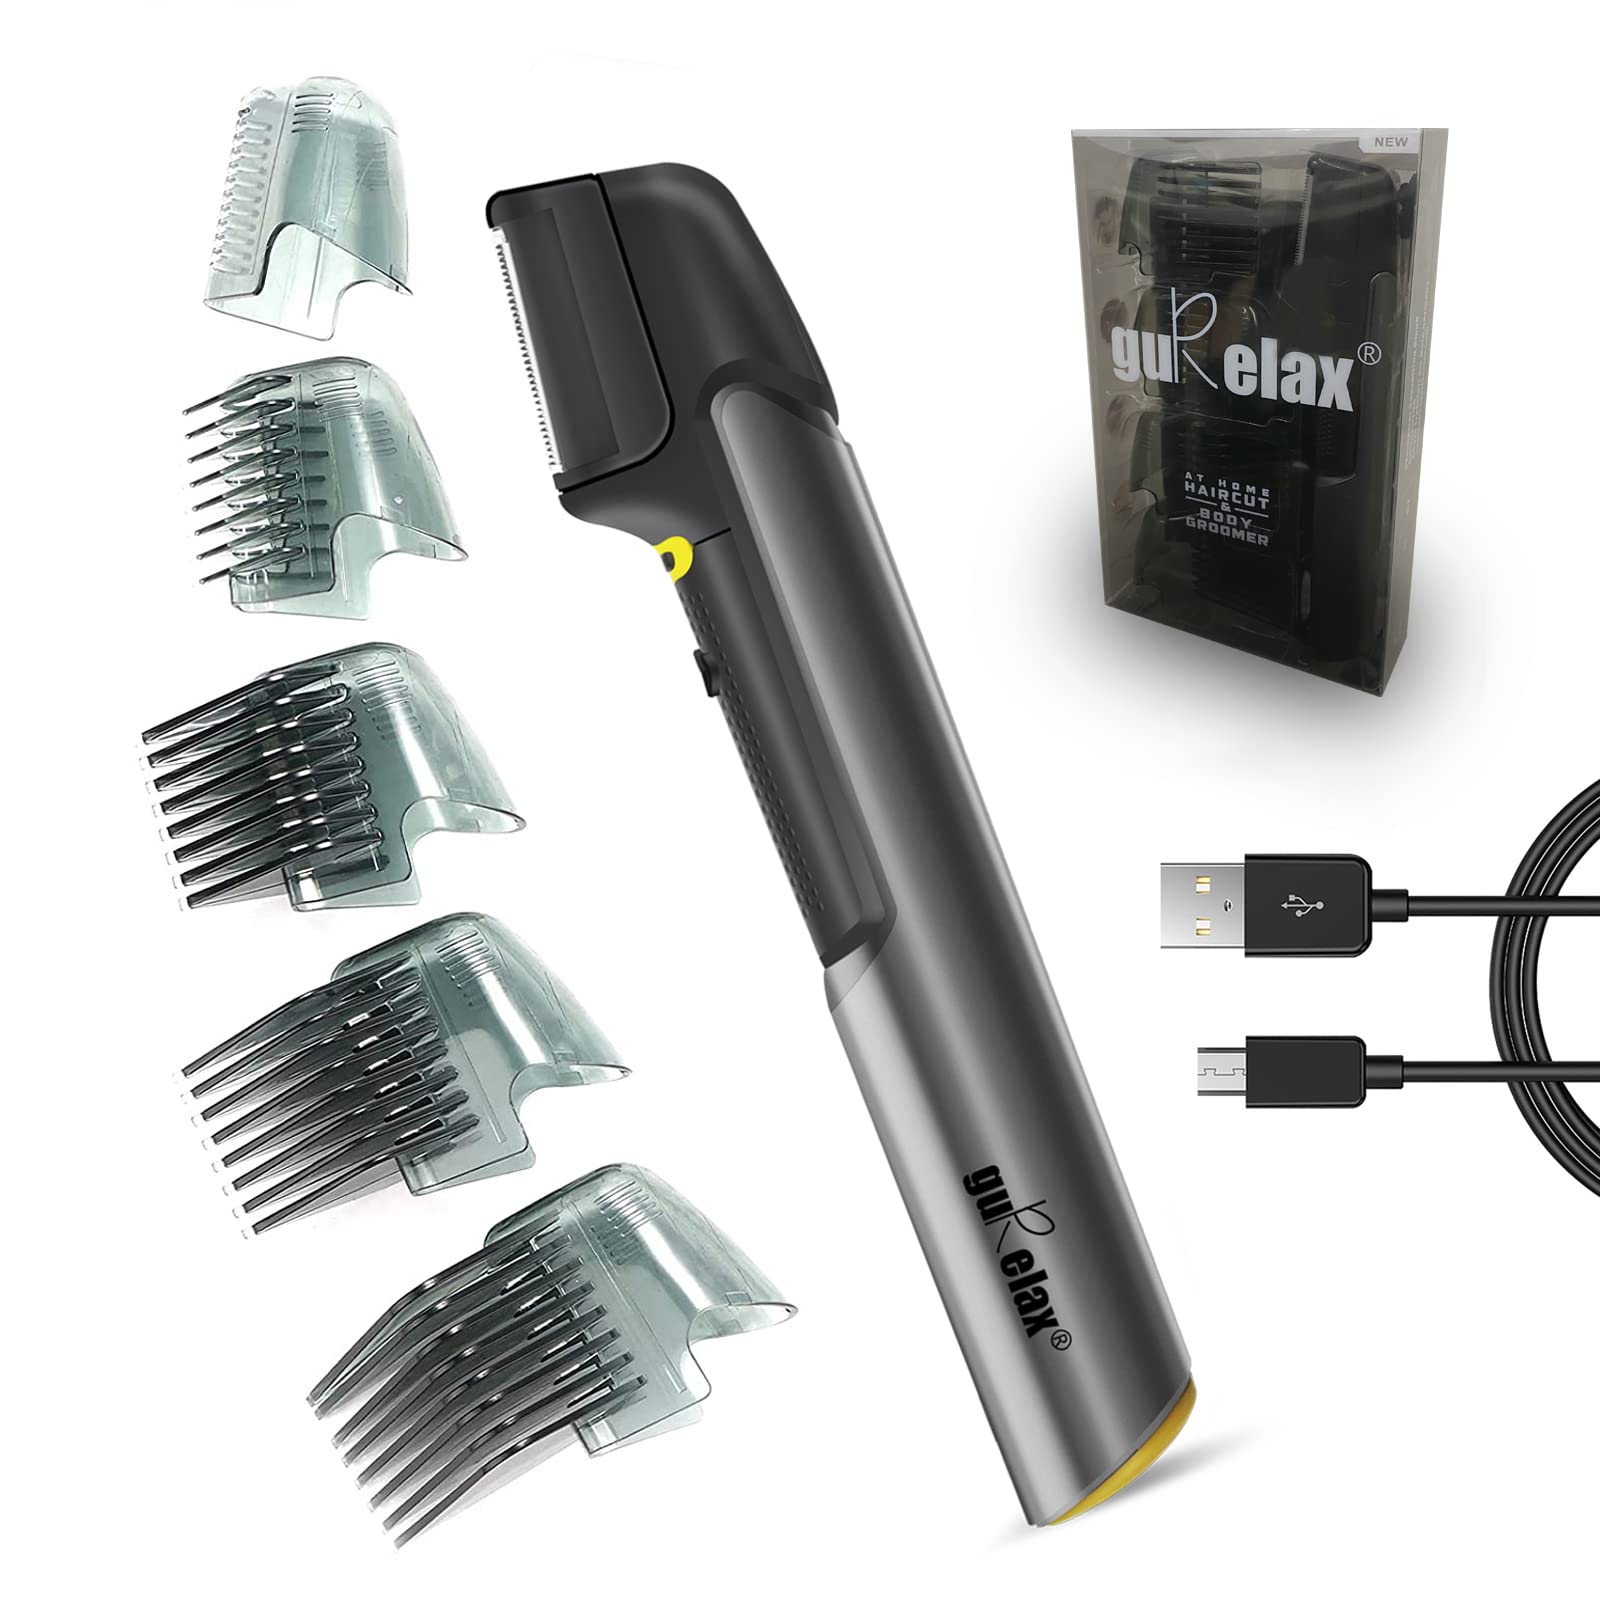 Gurelax Titanium Trim Hair Trimmer for Men, Trim Hair Cutting Tool as seen  on TV, Men's